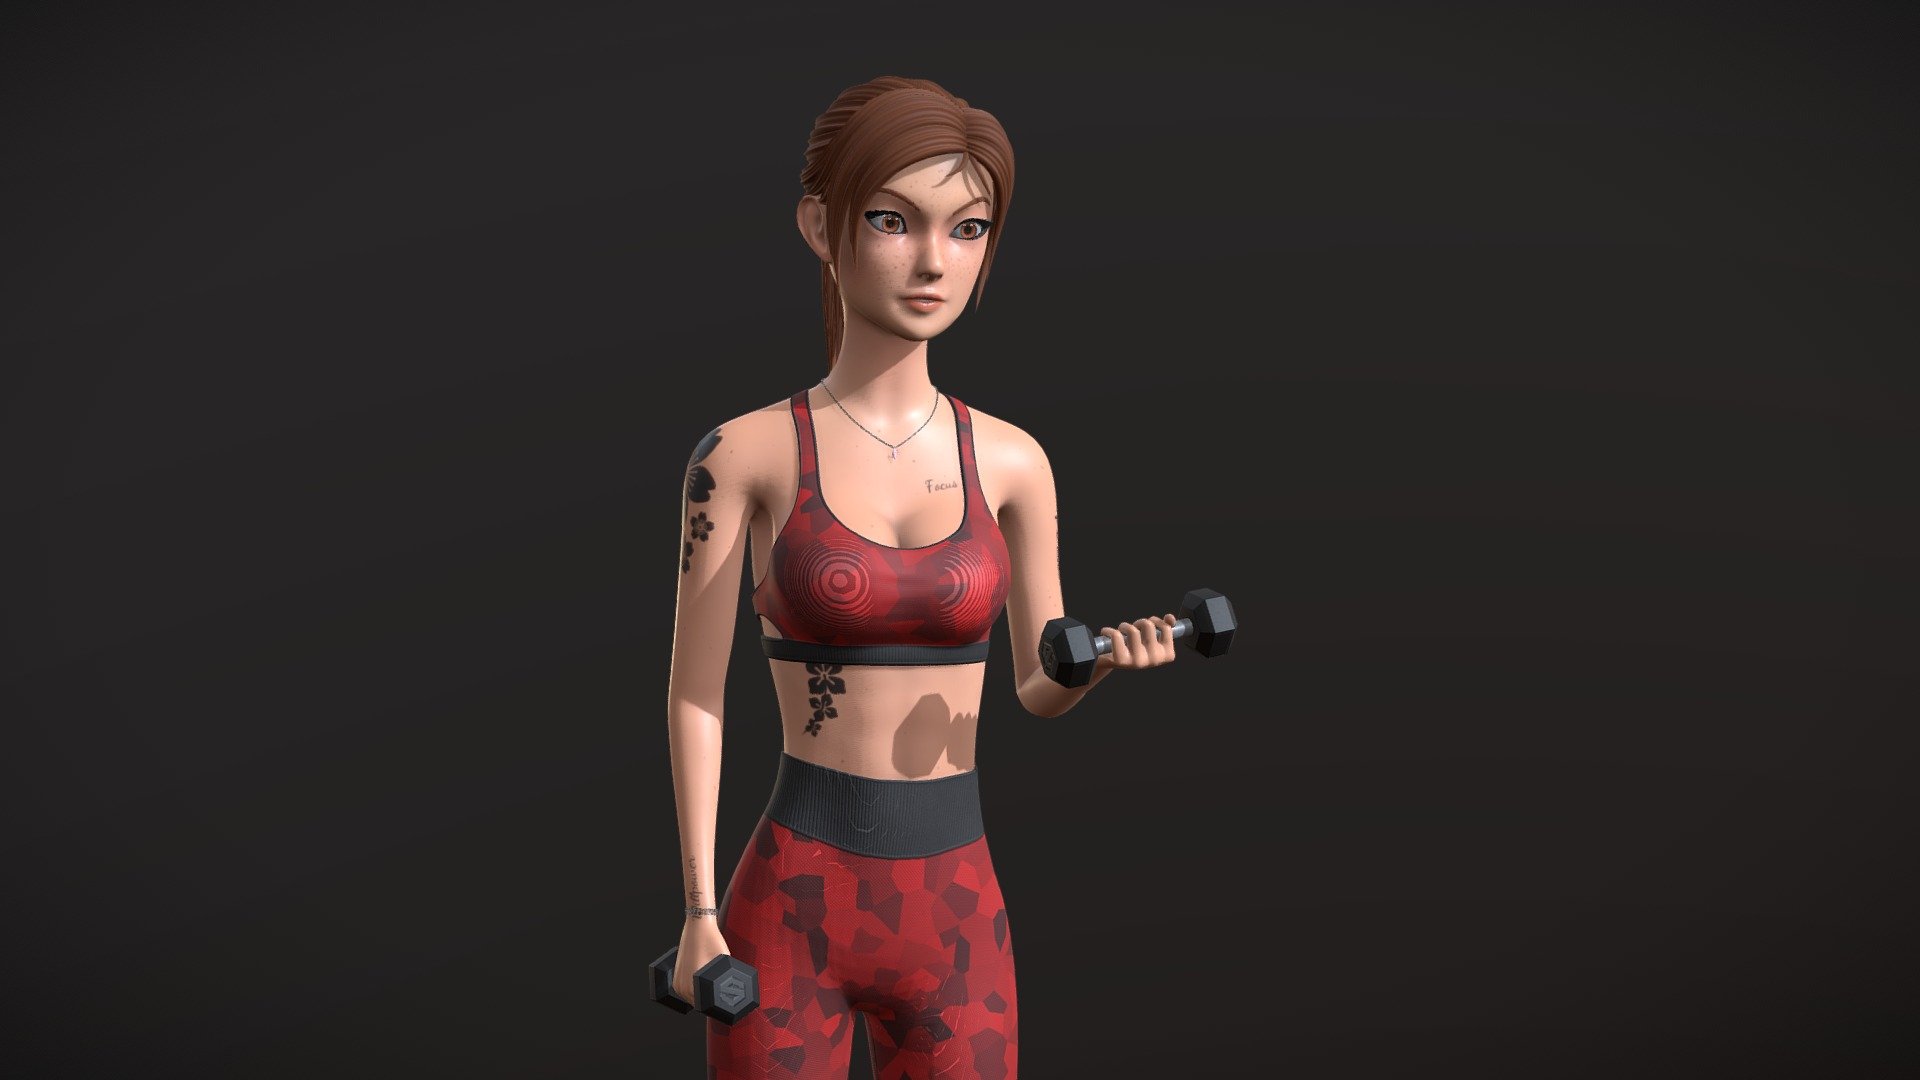 My first character :)

Made using Blender + Substance Painter

https://www.artstation.com/artwork/Wmk24X - Gym Girl - 3D model by Matzgo 3d model